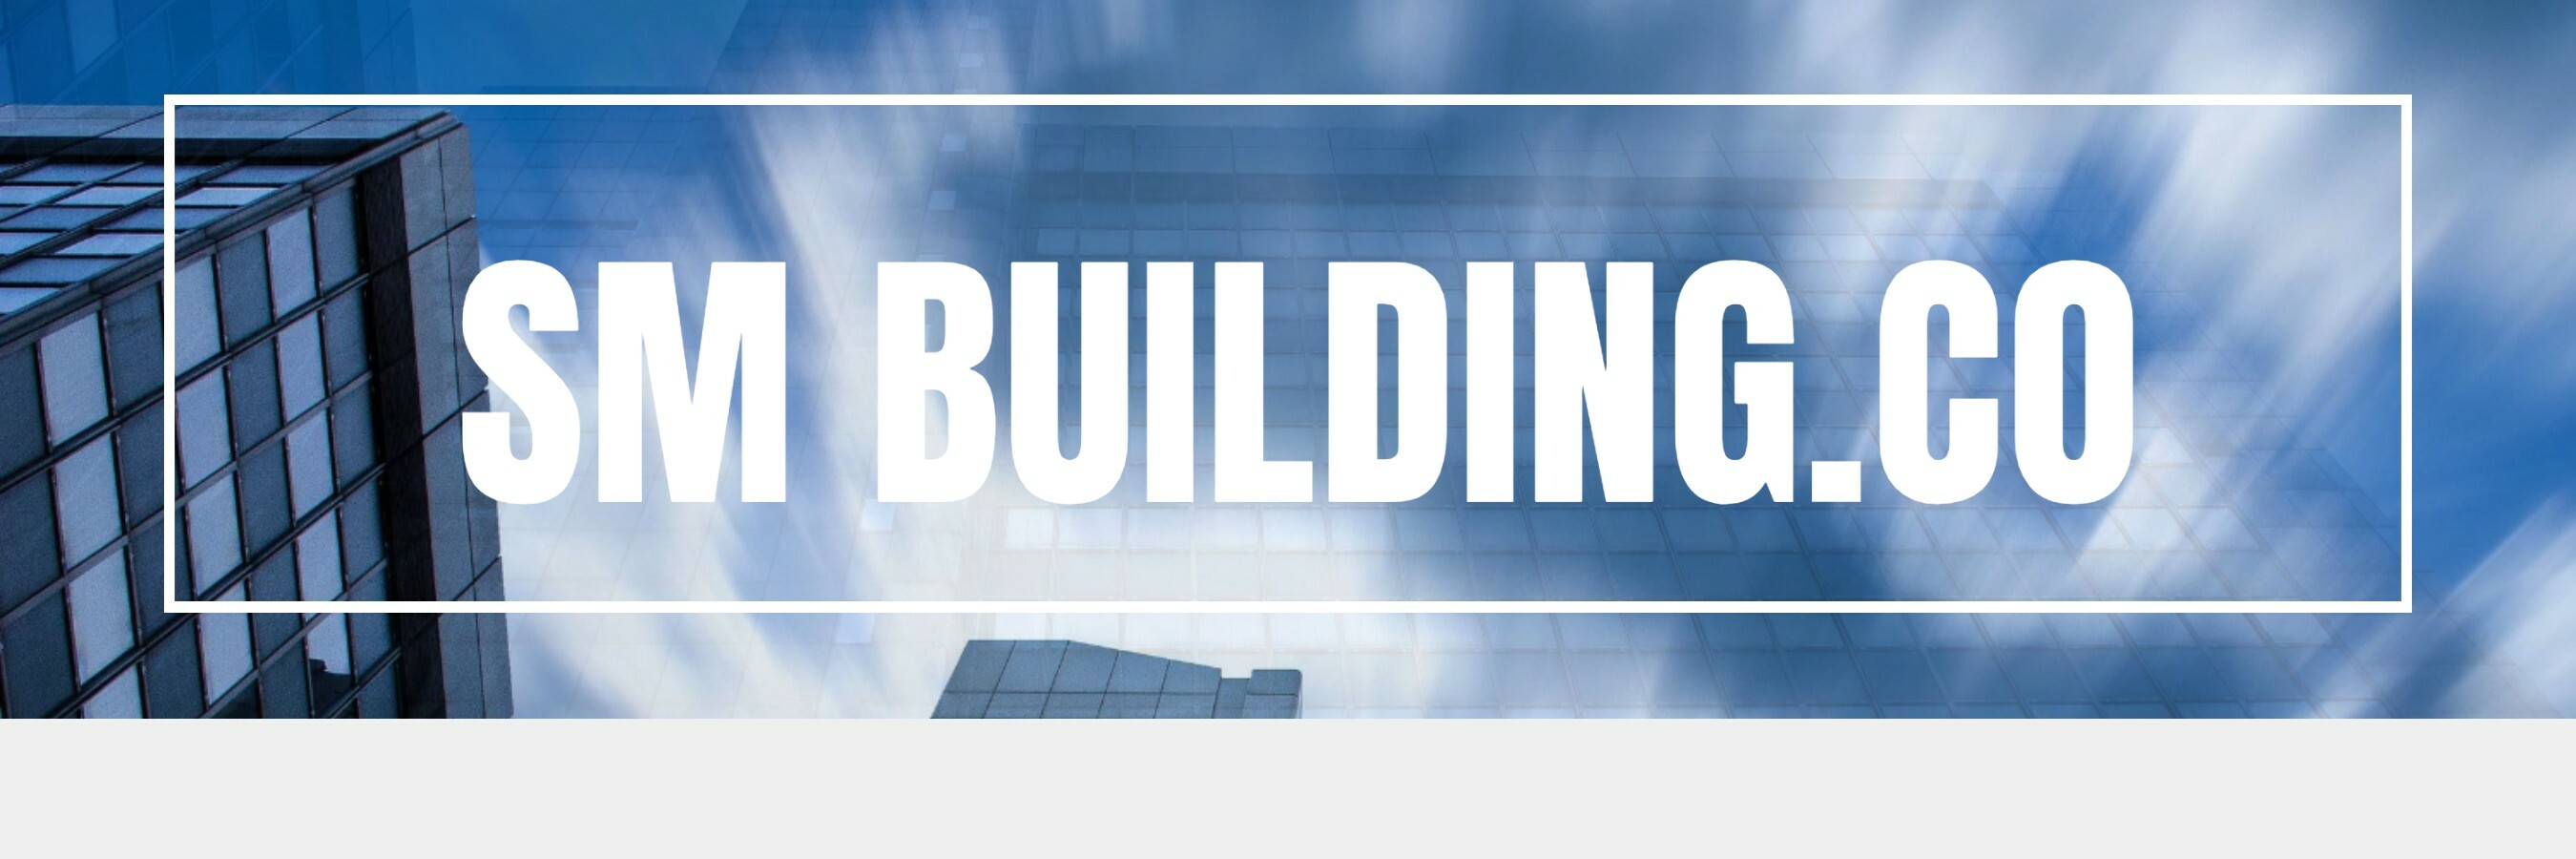 Modern building promo template